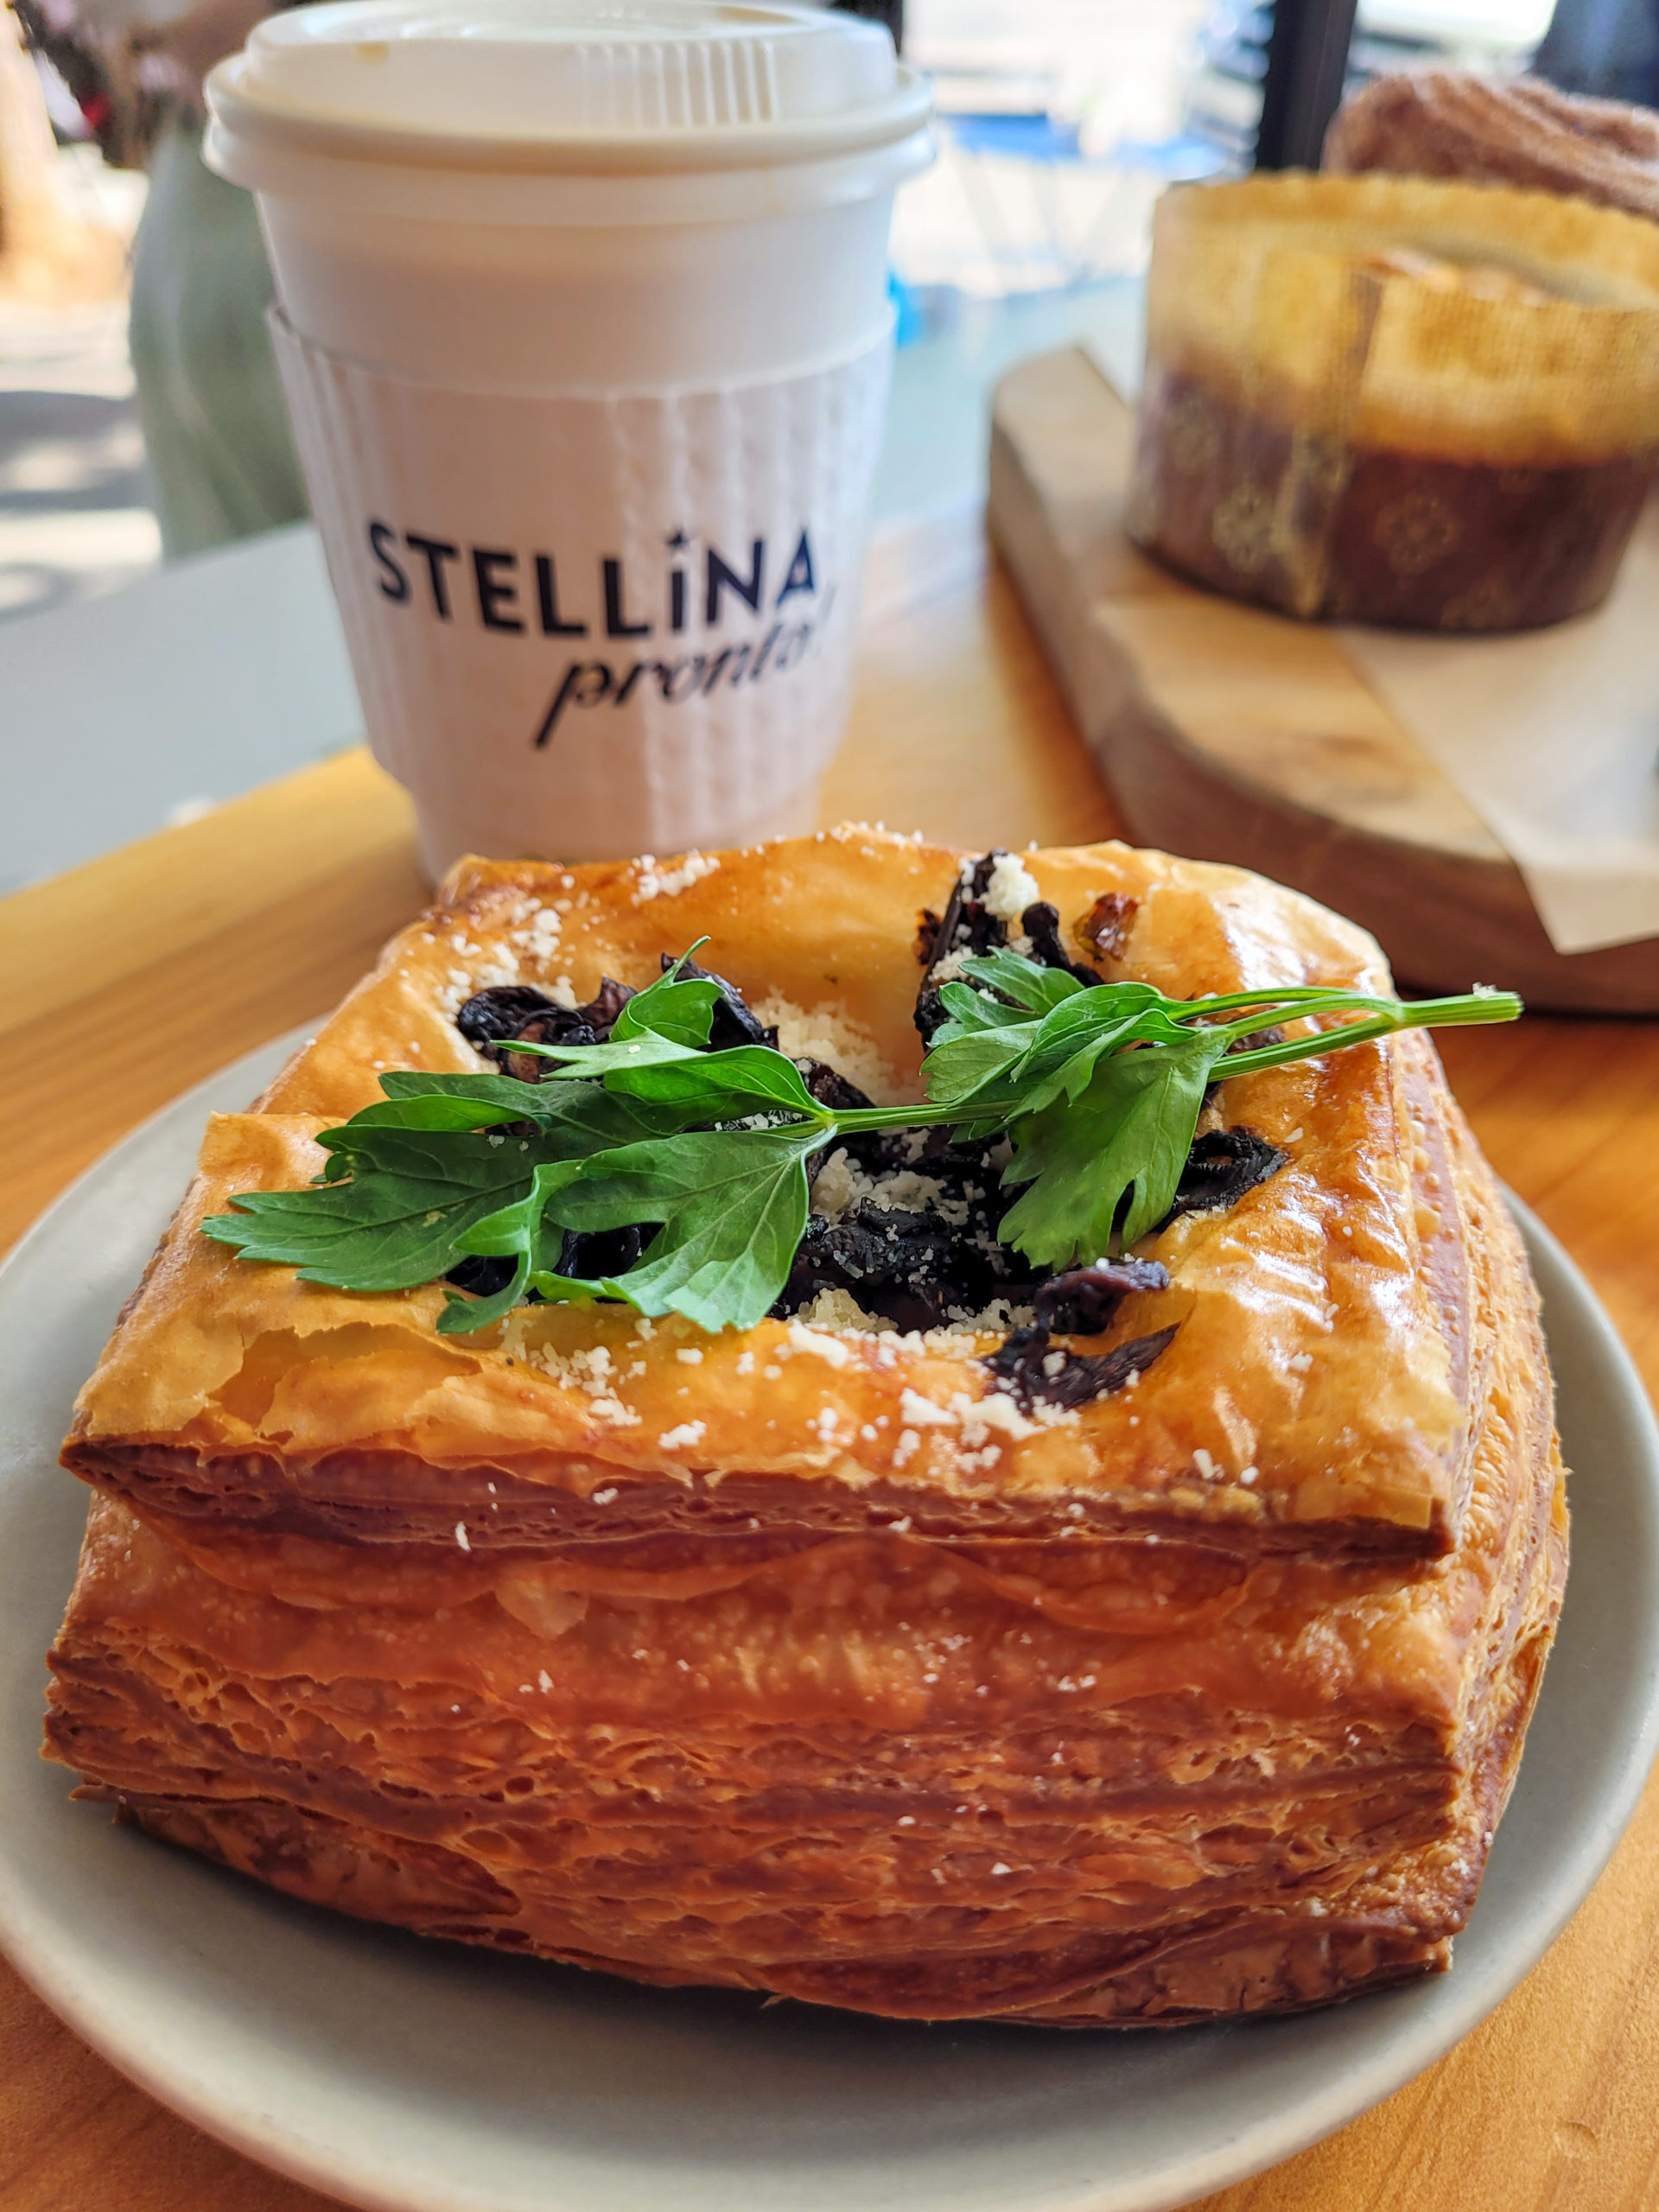 Mushroom and cheese puff pastry at Stellina Pronto in Petaluma. (Heather Irwin/Sonoma Magazine)